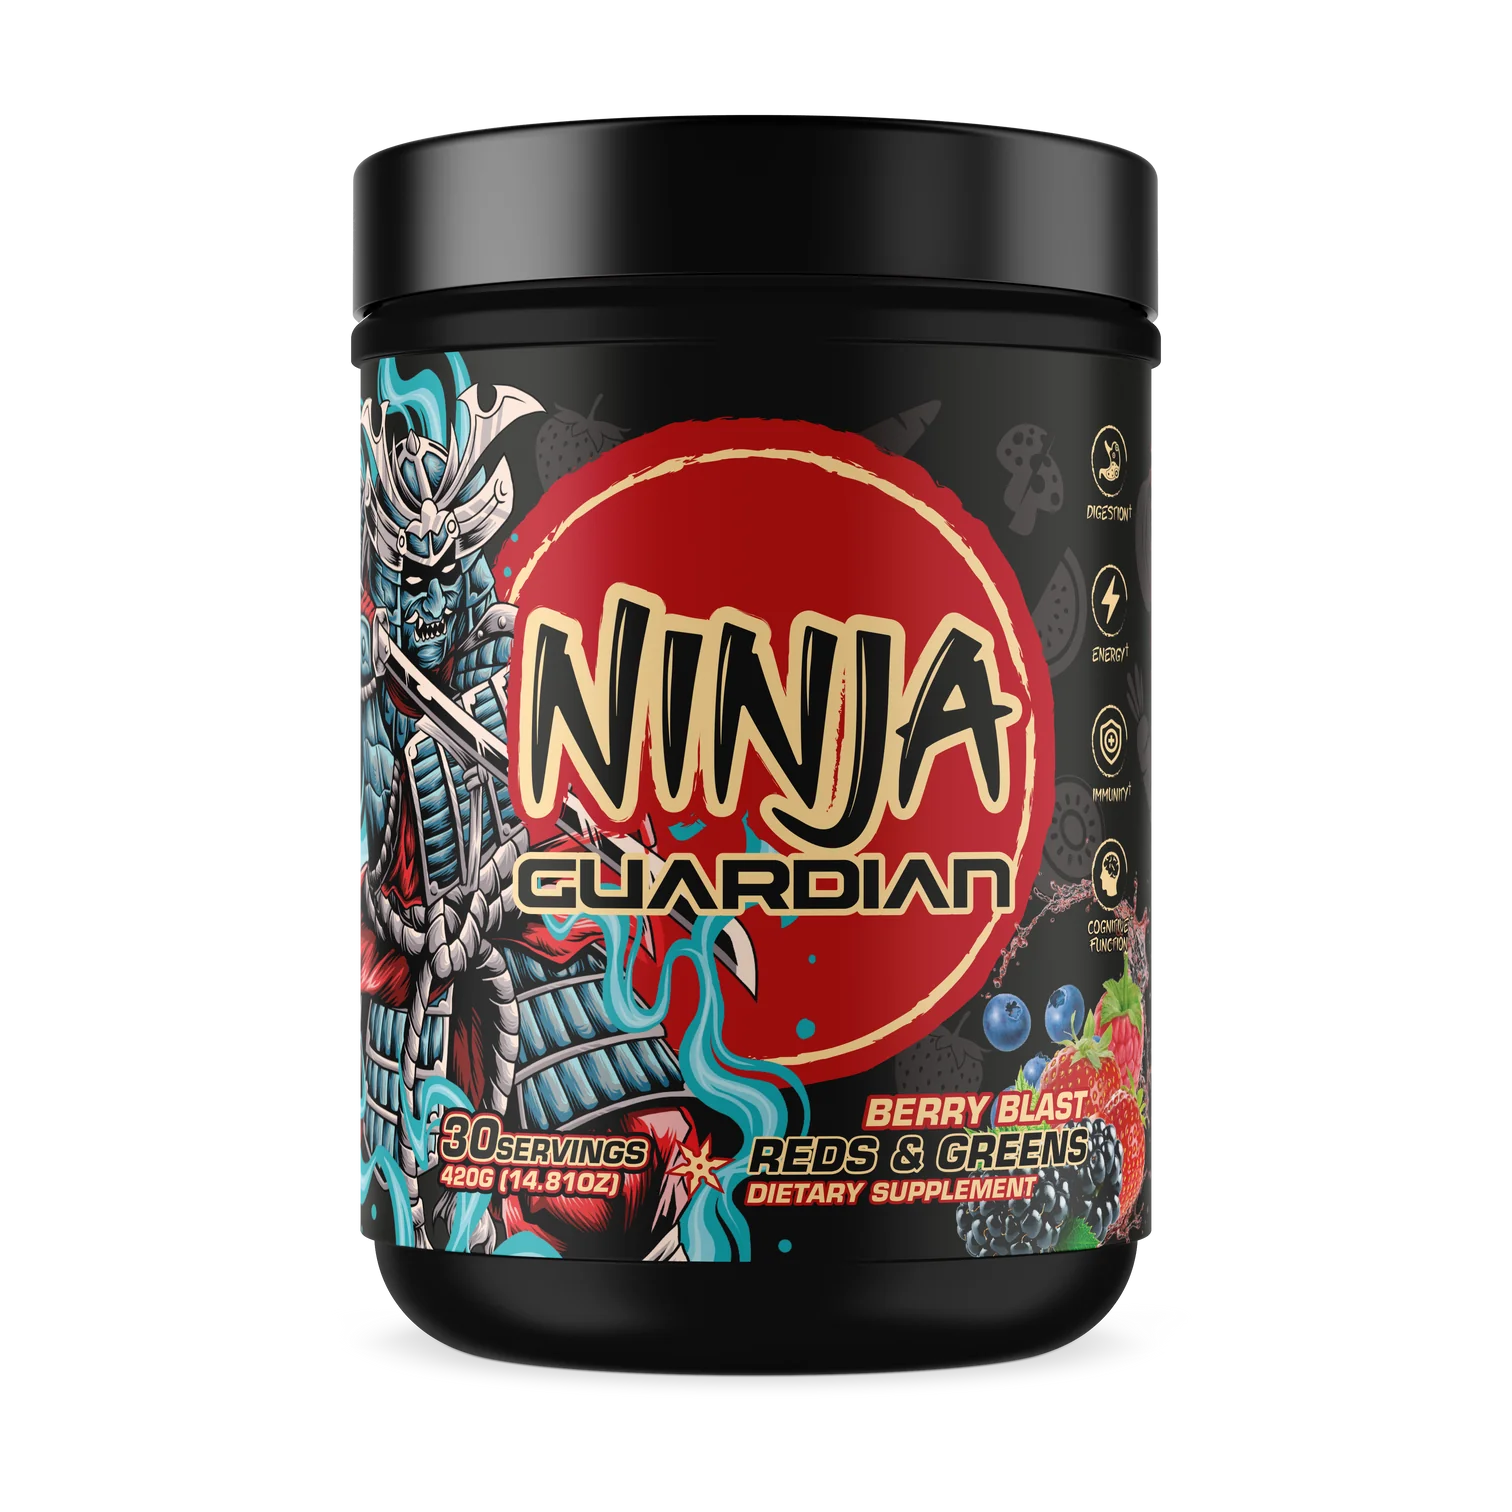 Ninja Guardian Greens and Reds (Berry Blast)